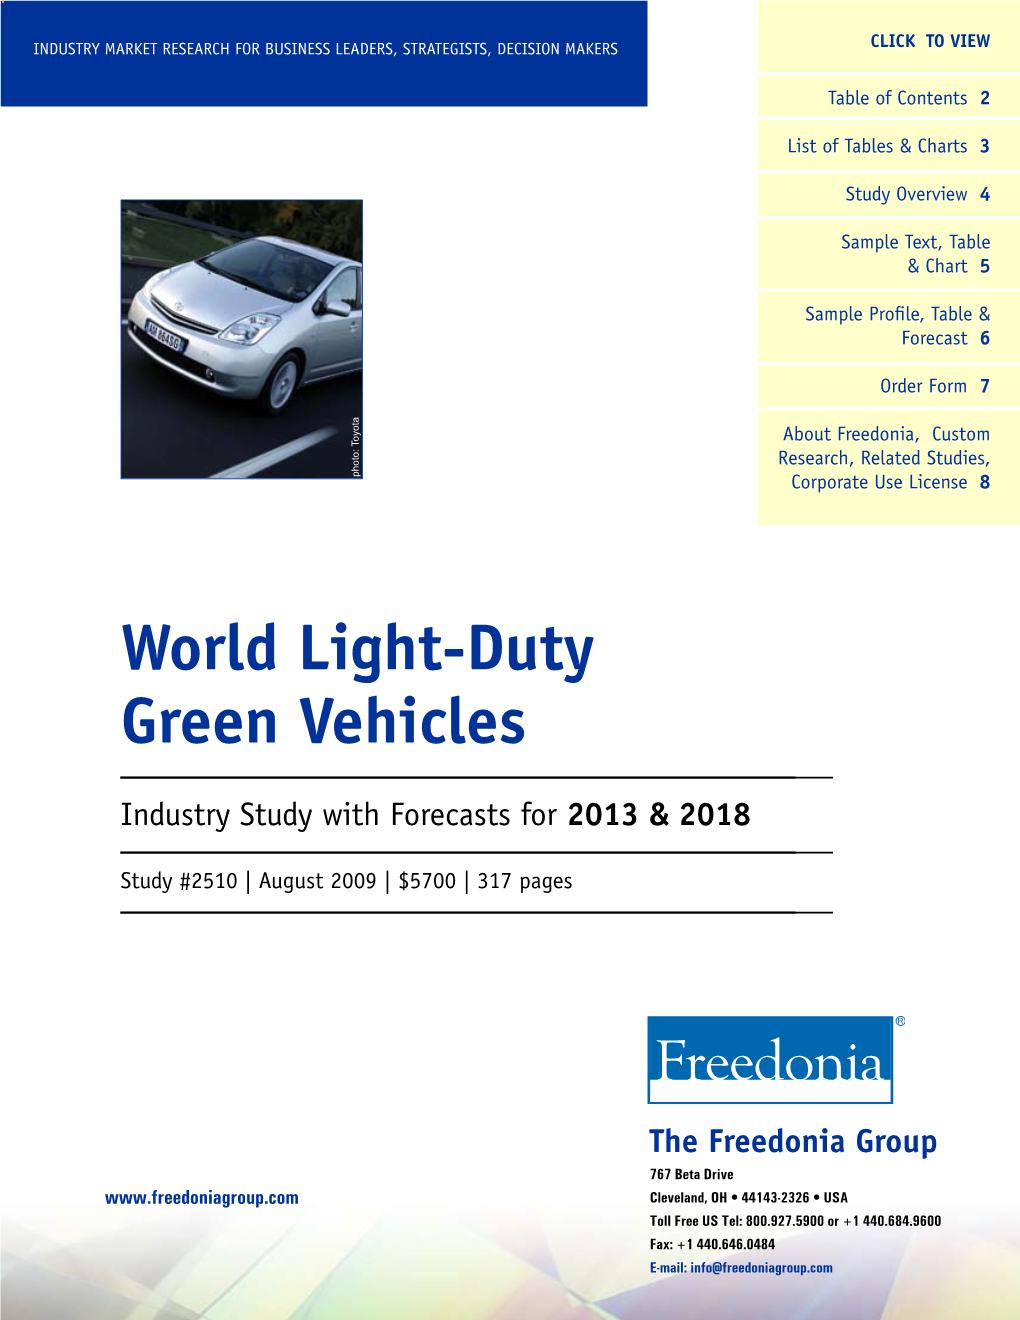 World Light-Duty Green Vehicles